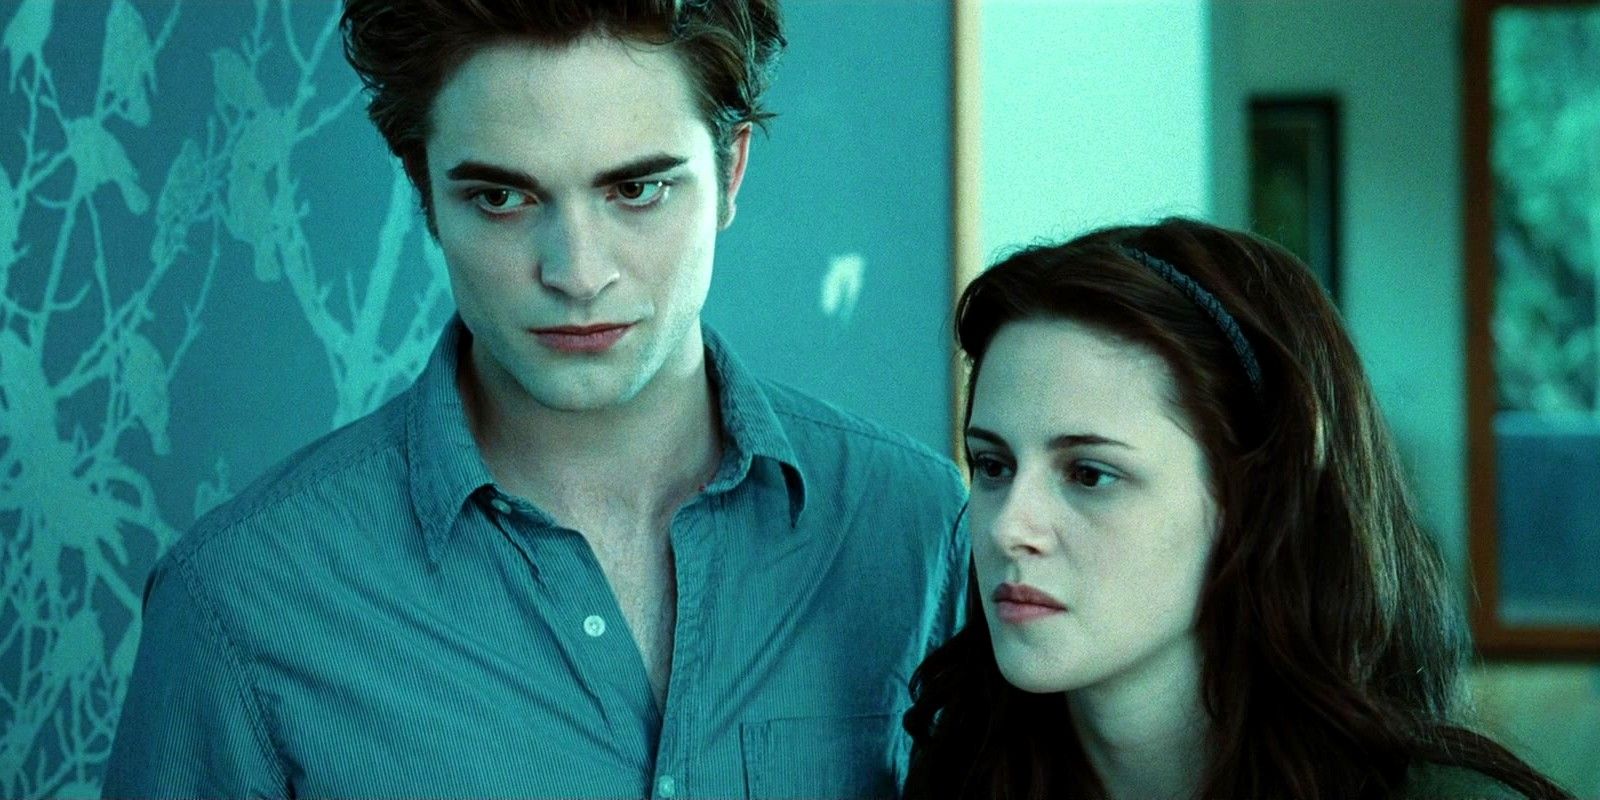 Edward (Robert Pattinson) and Bella (Kristen Stewart) standing together in his house in Twilight